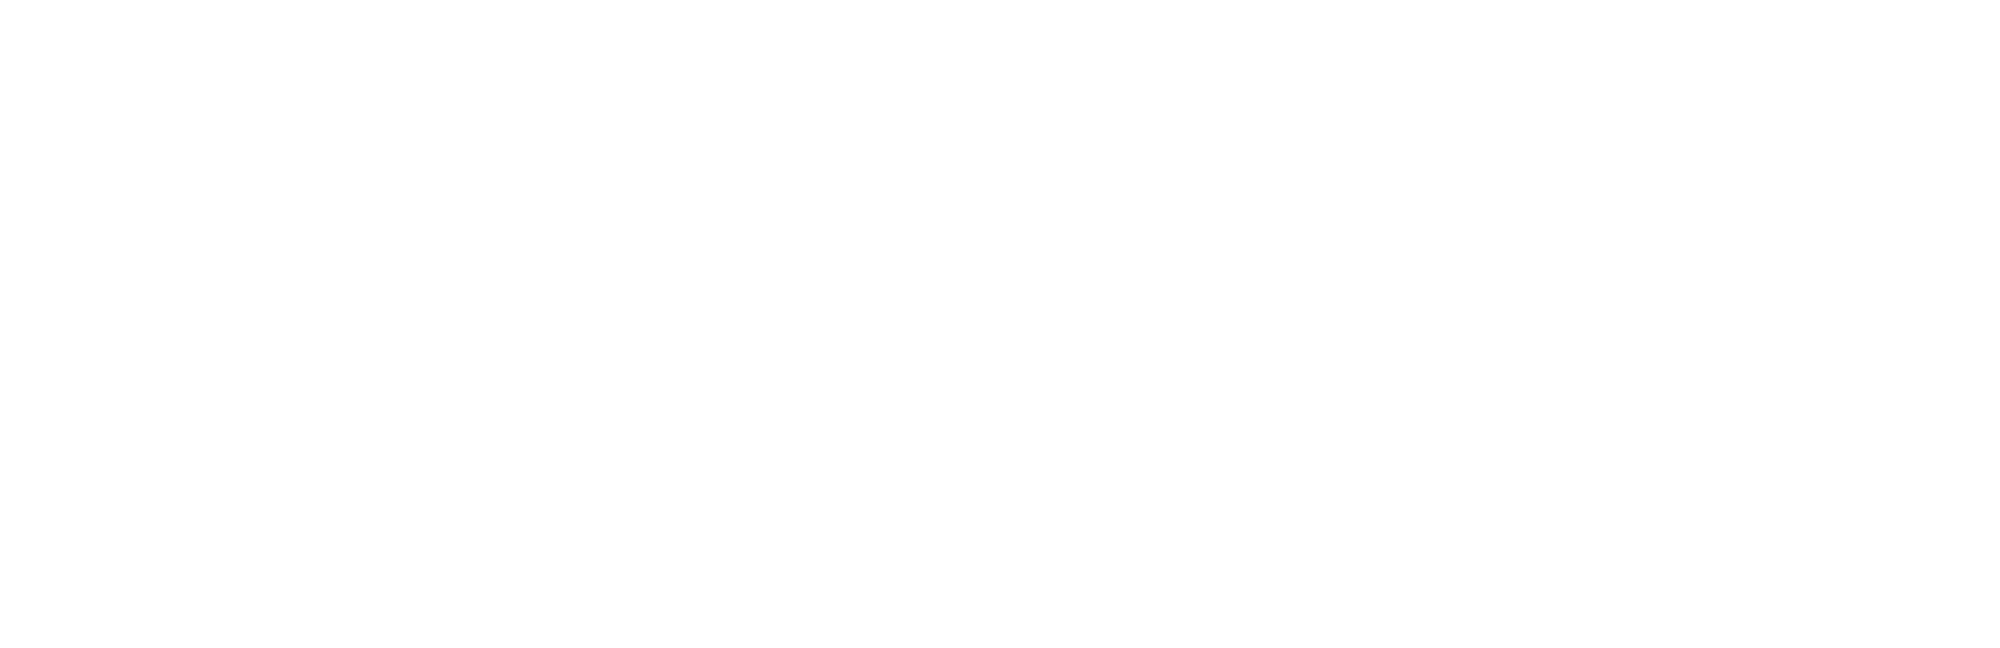 Phoenix Contact_Weißgrau